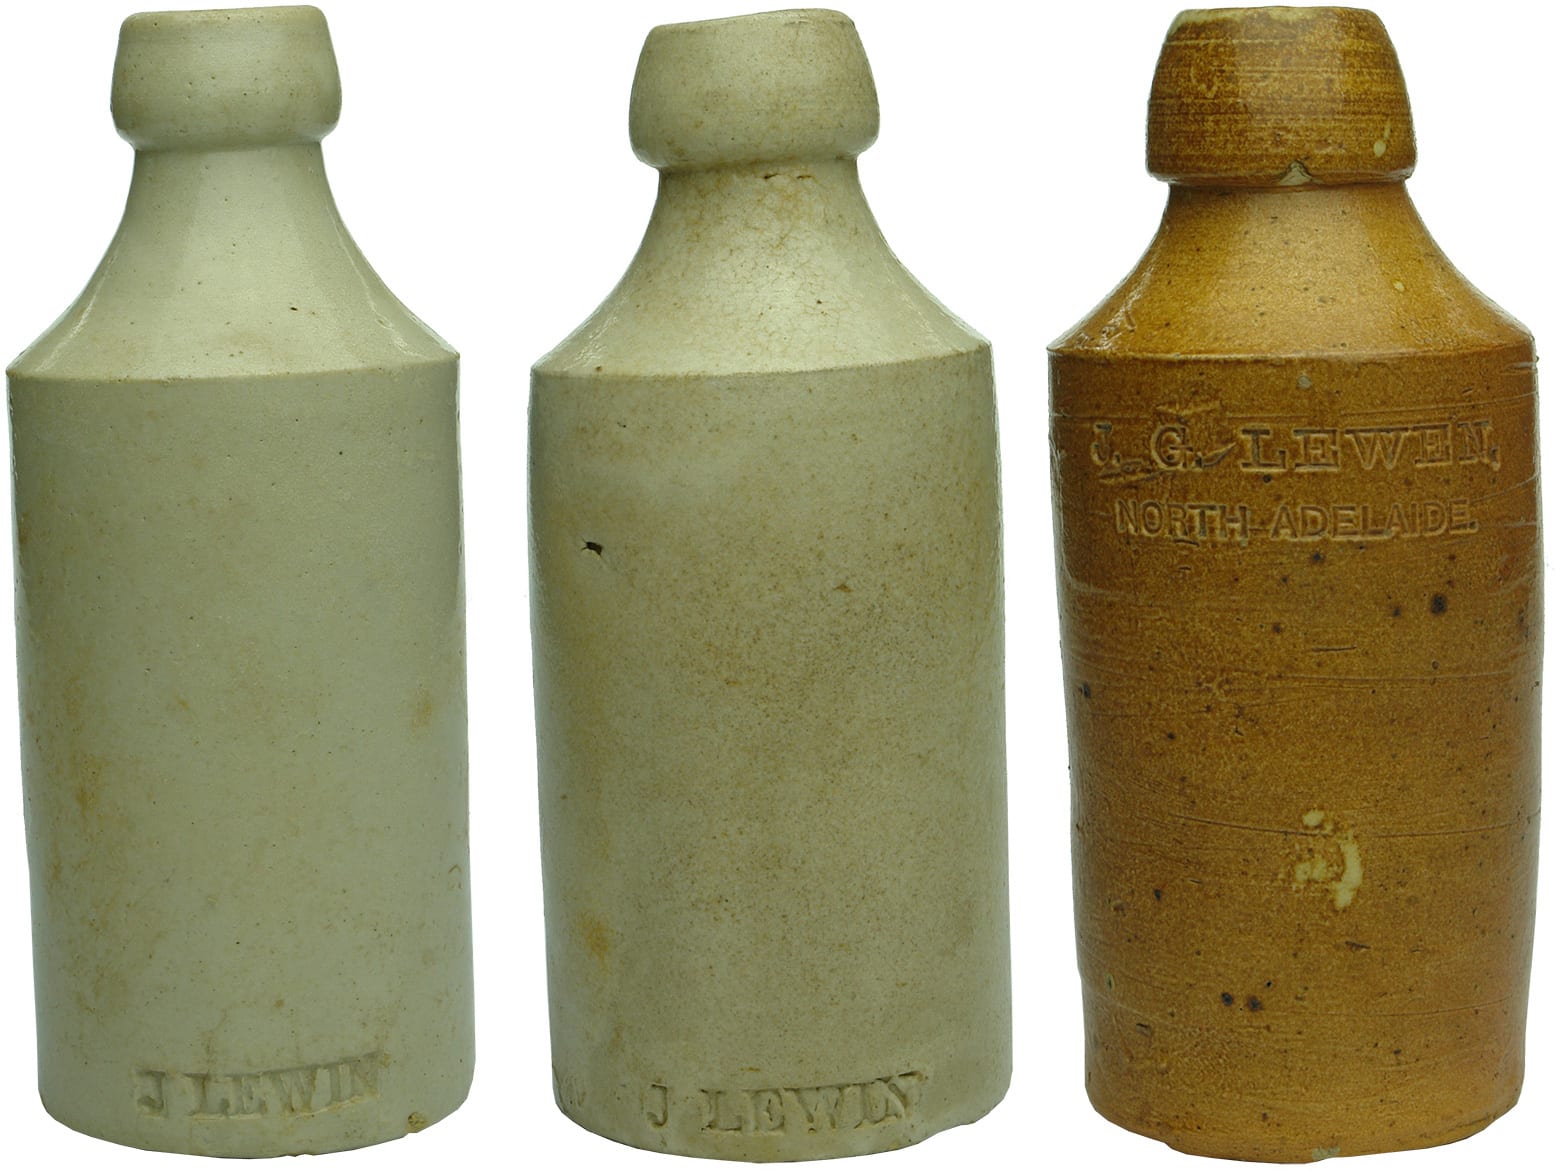 Lewin Lewen North Adelaide Impressed Stoneware Ginger Beer Bottles